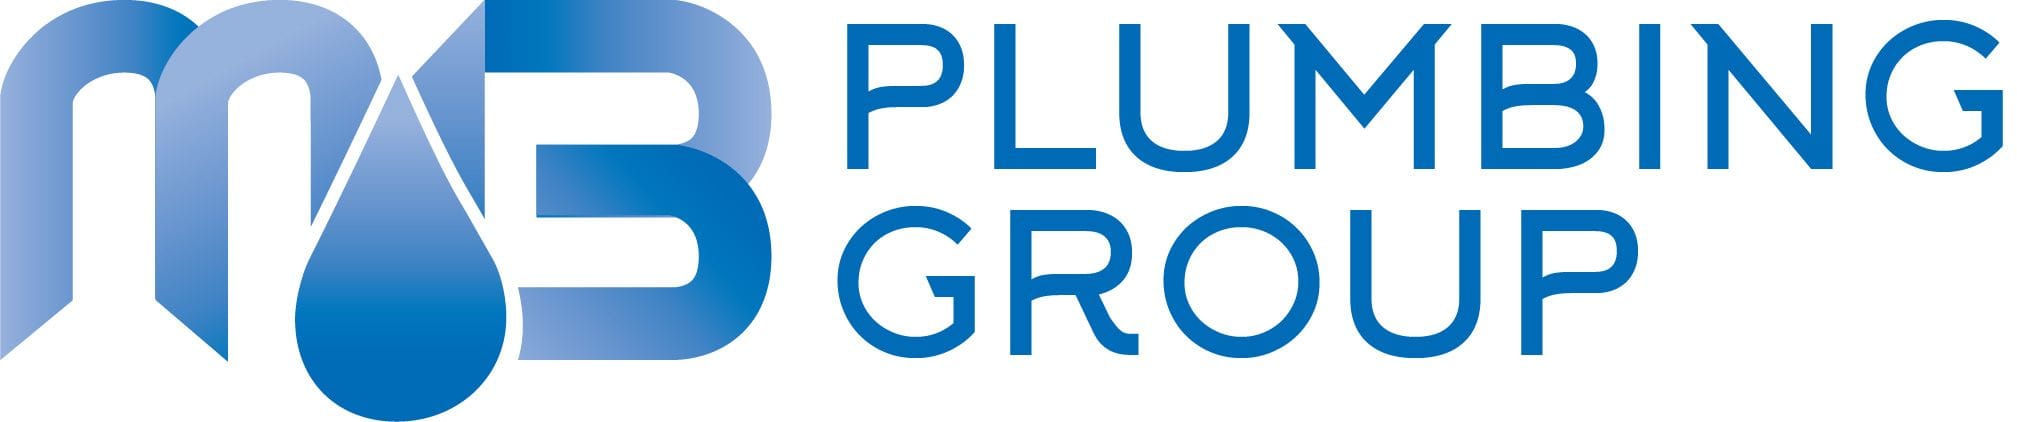 PSG Delivery Partners | Proficient Services Group